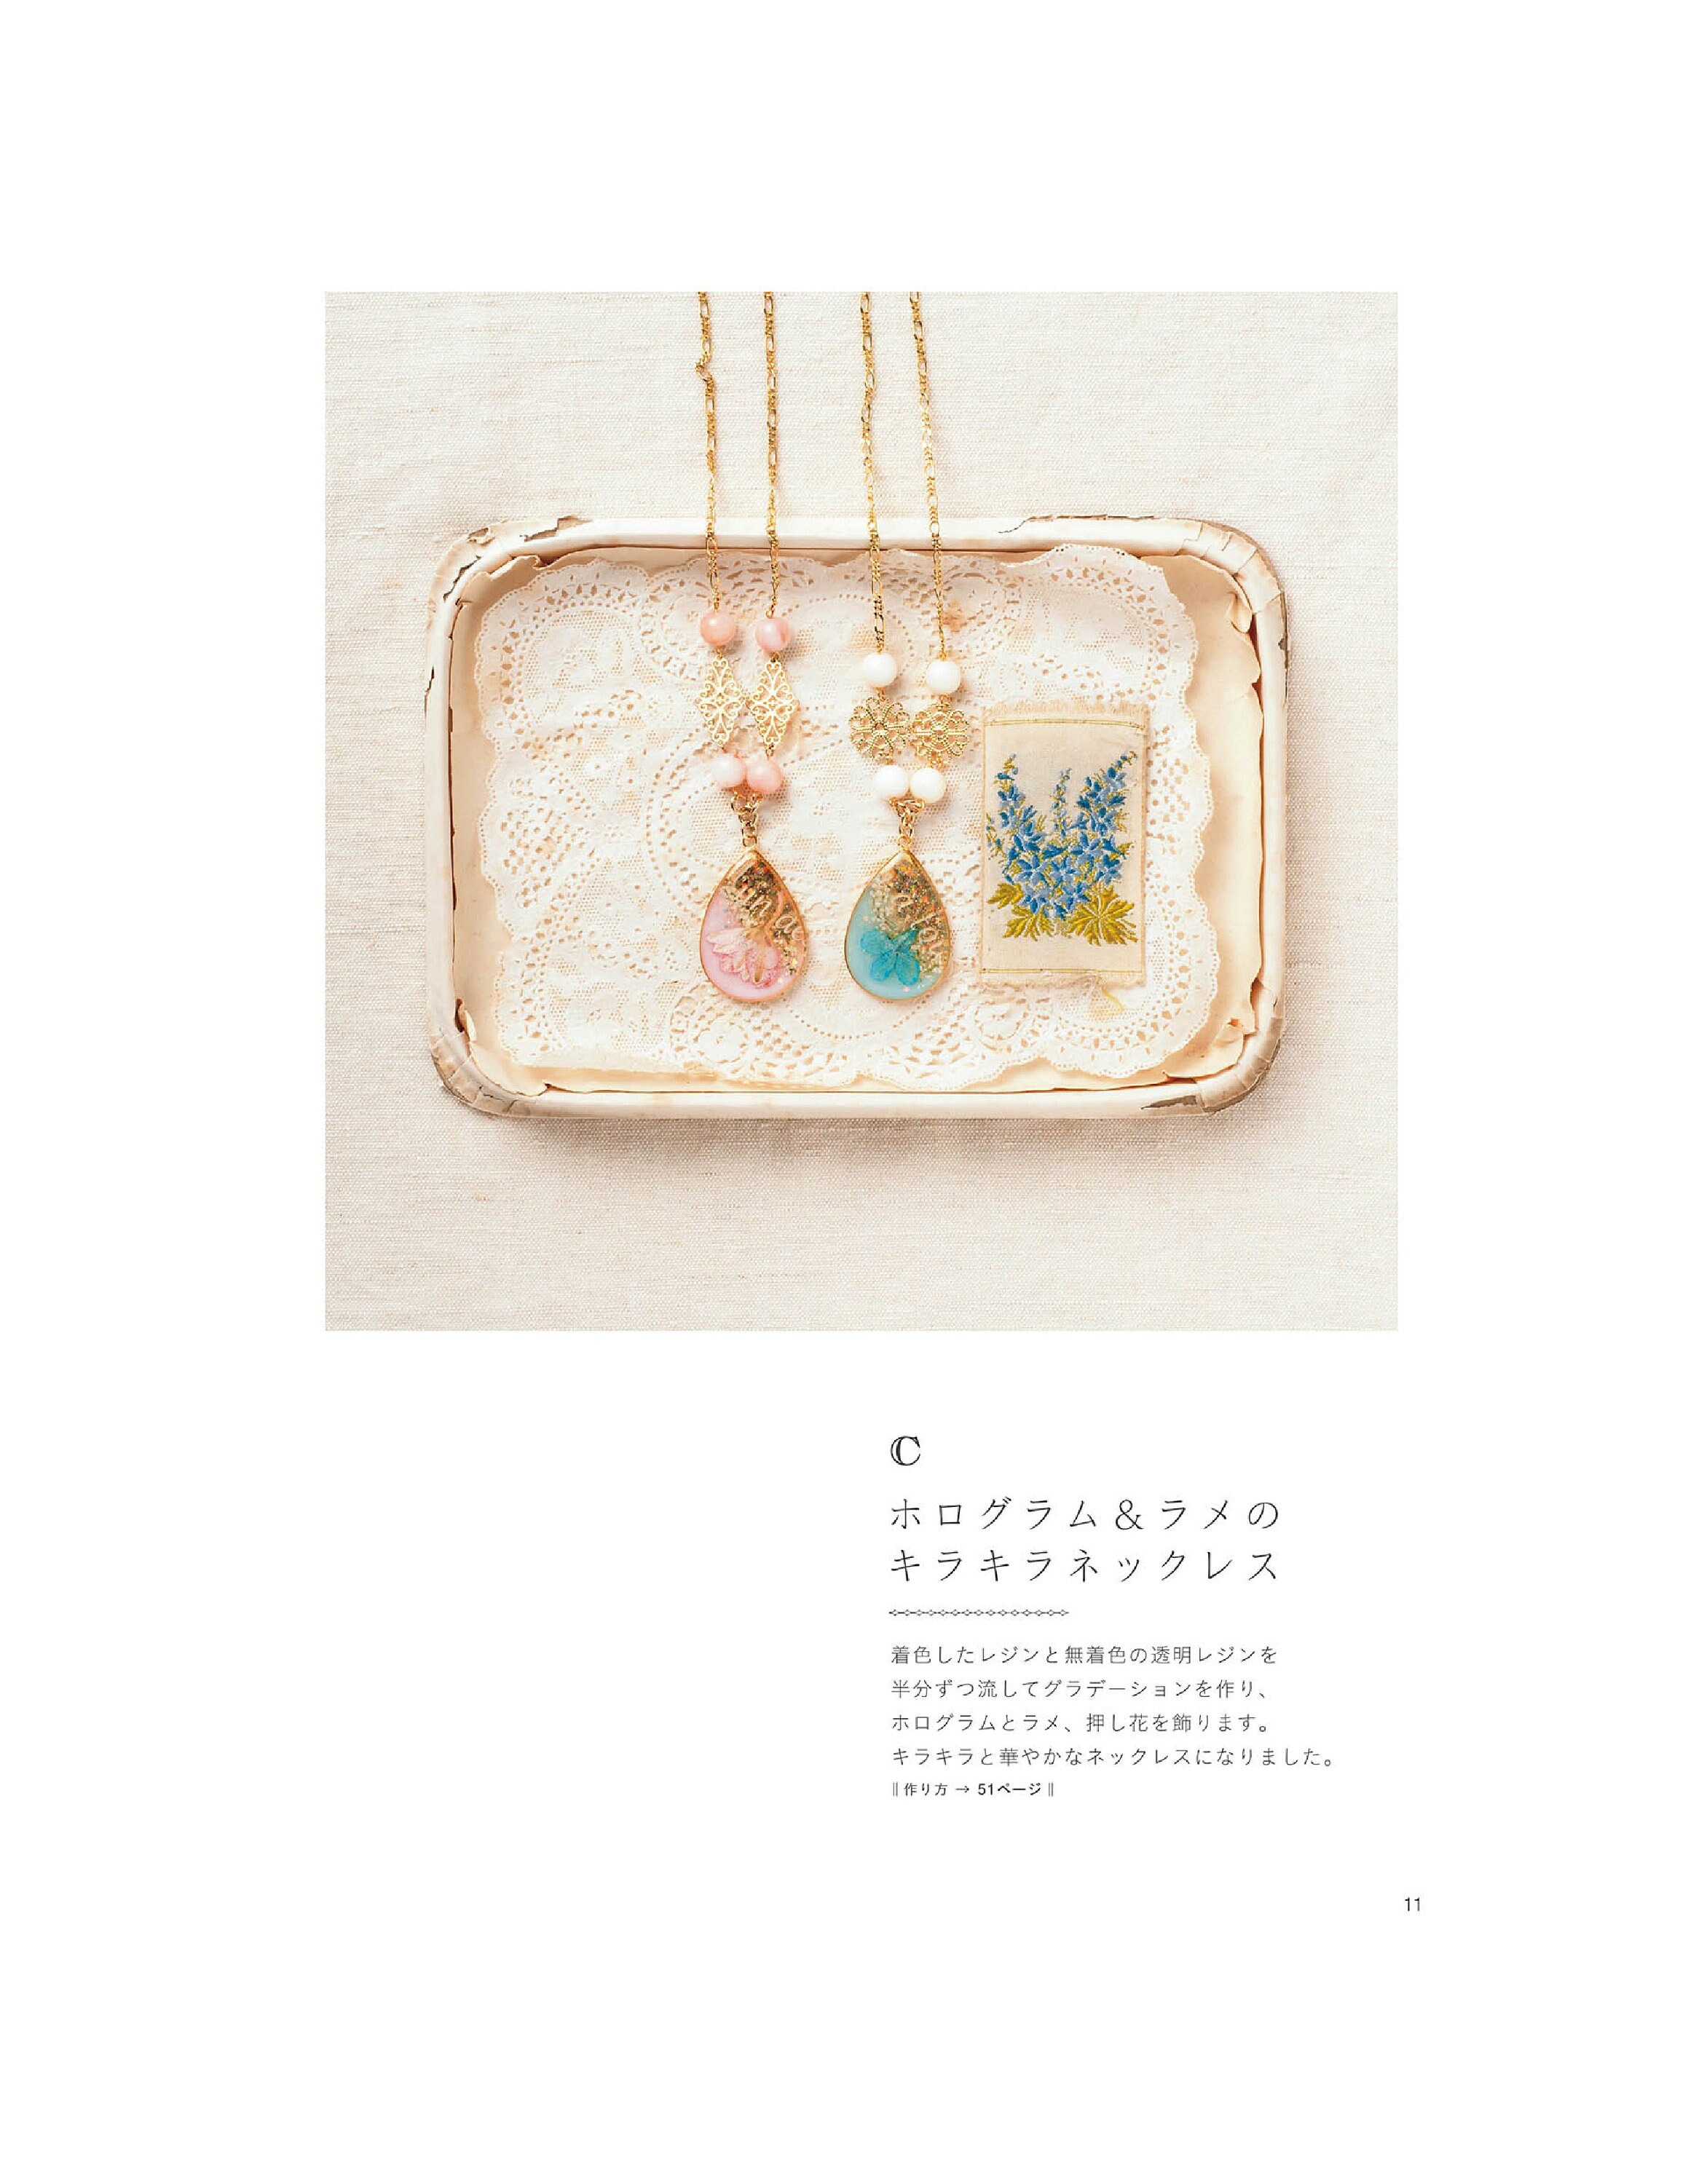 UV Resin Accessories Japanese Craft Book Japan